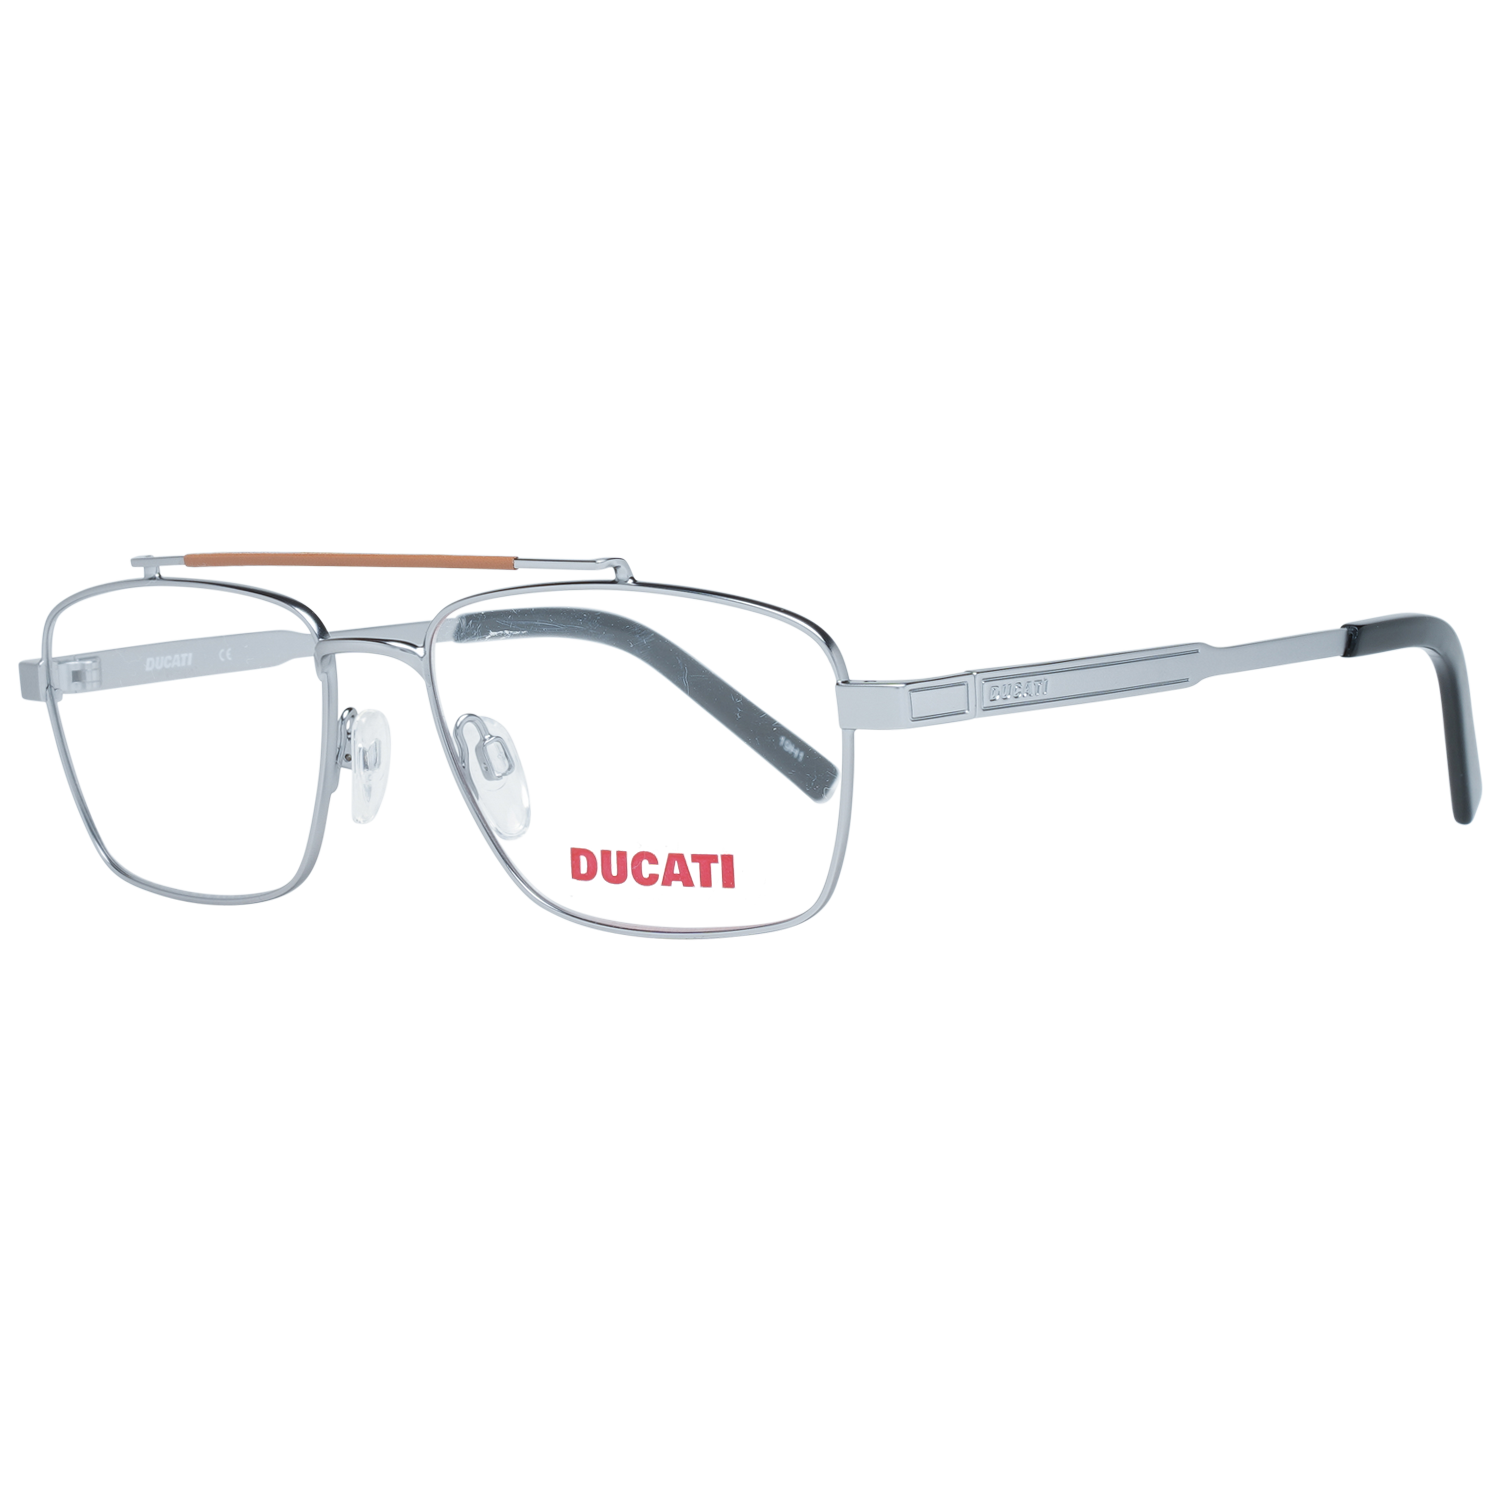 Ducati Frames Ducati Optical Frame DA3019 910 54 Eyeglasses Eyewear UK USA Australia 